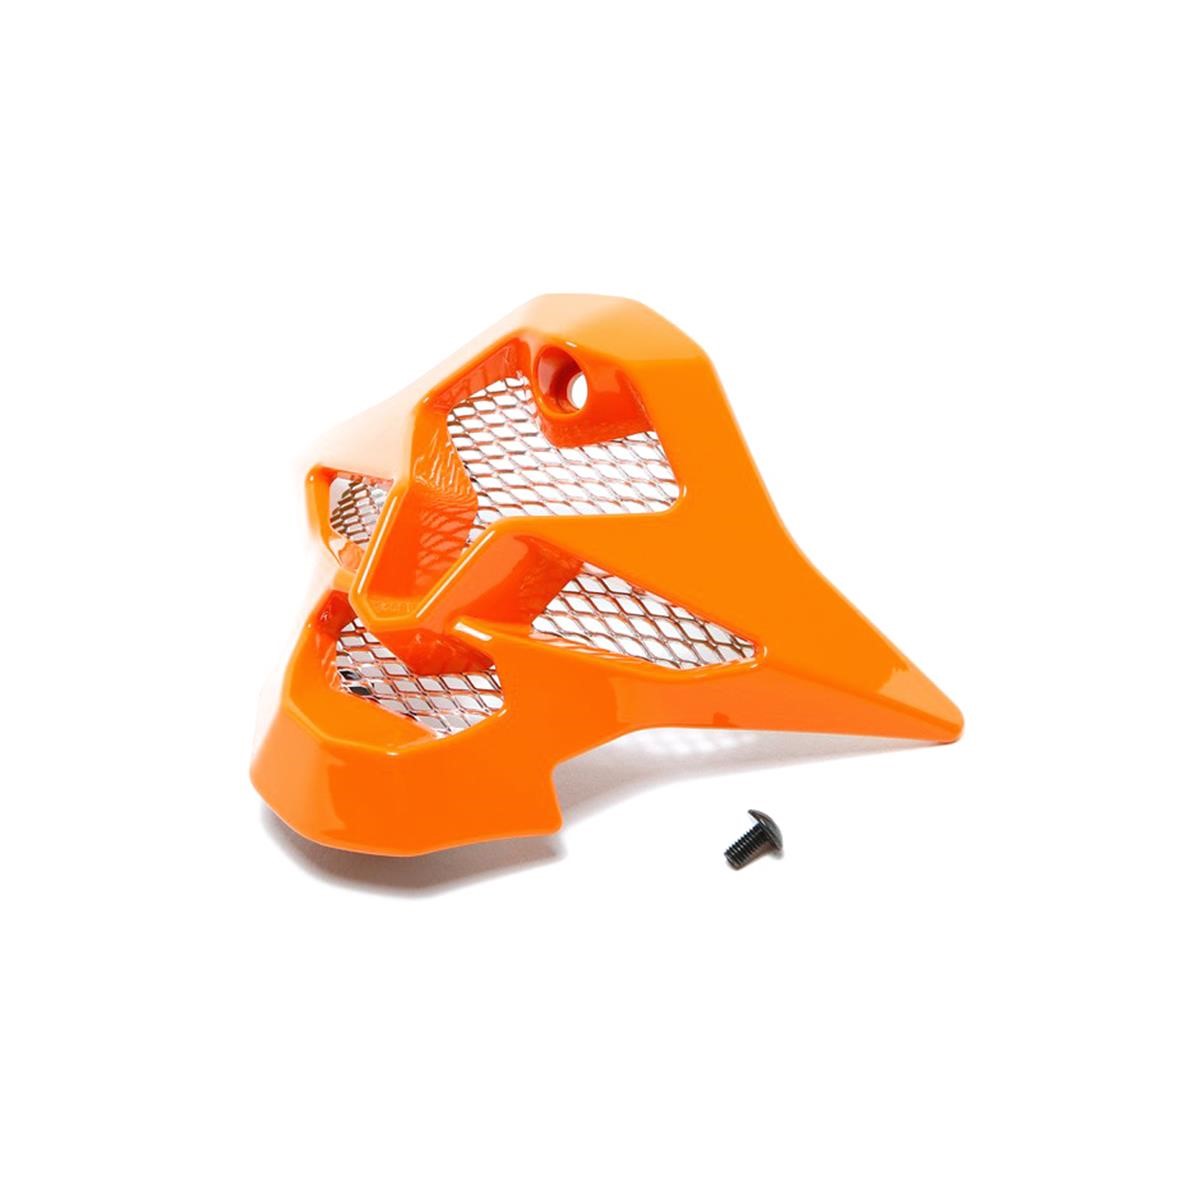 Shoei Replacement Mouthpiece VFX-W Pure Orange